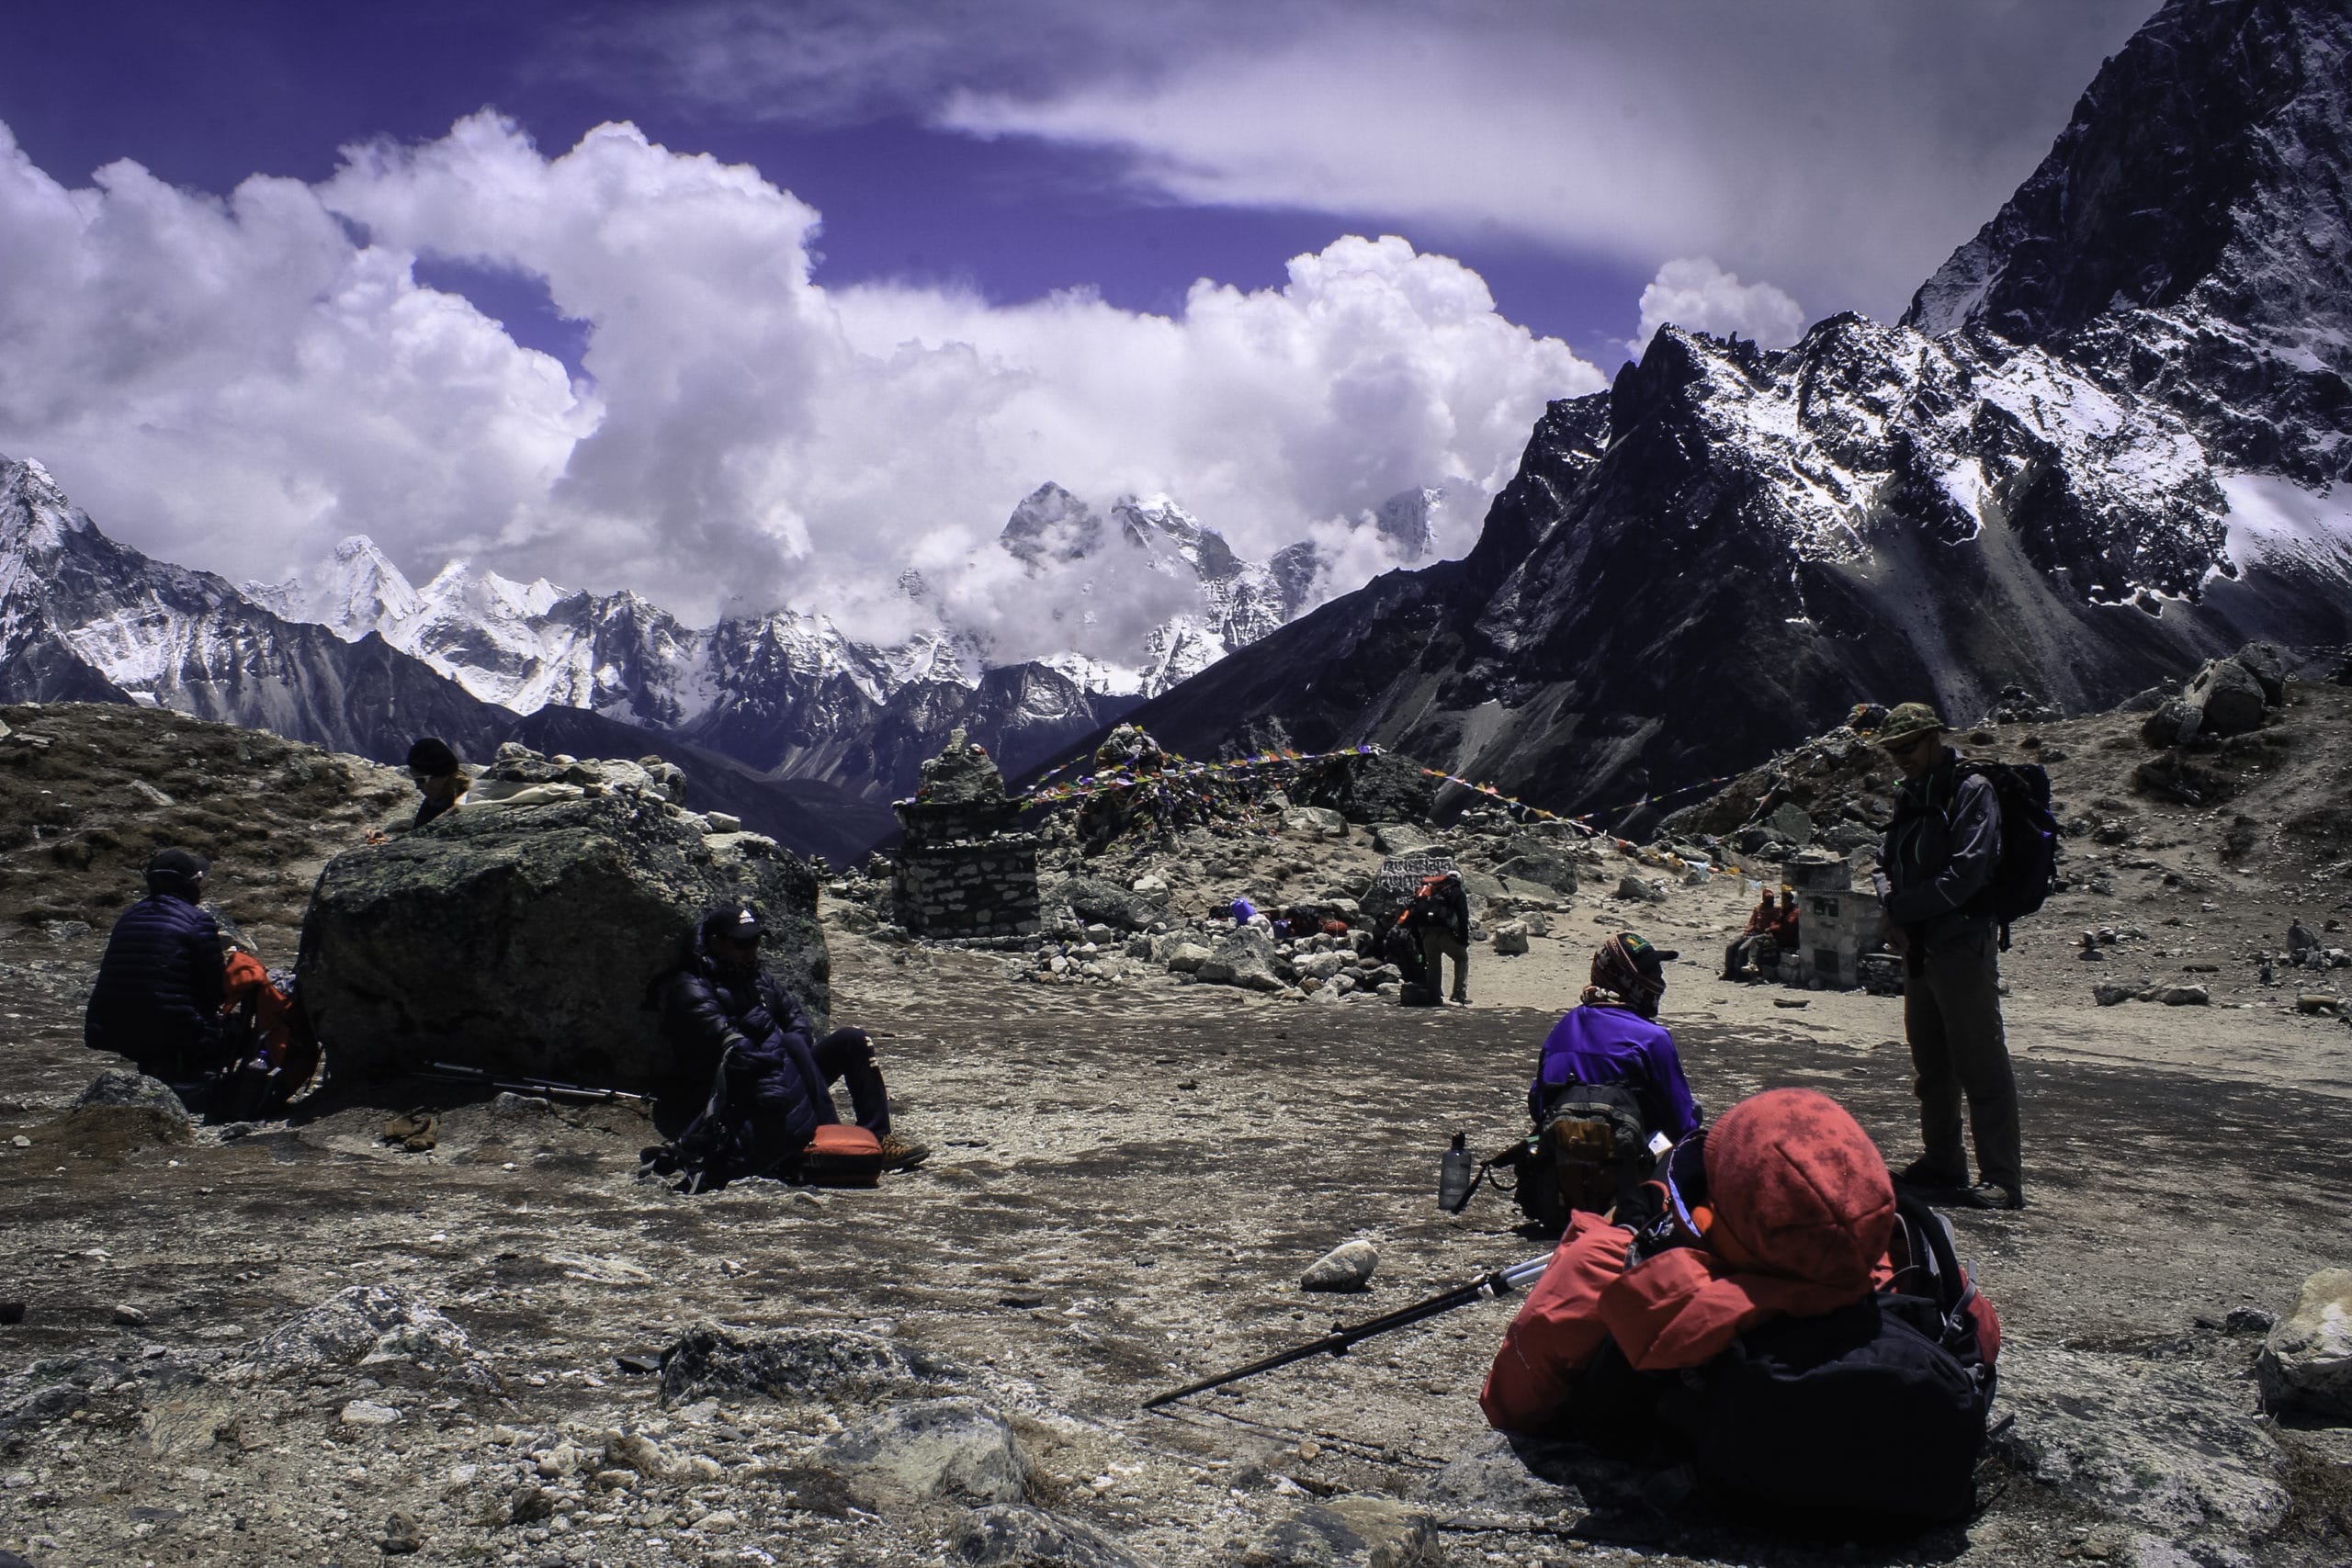 The trek up through the Everest region